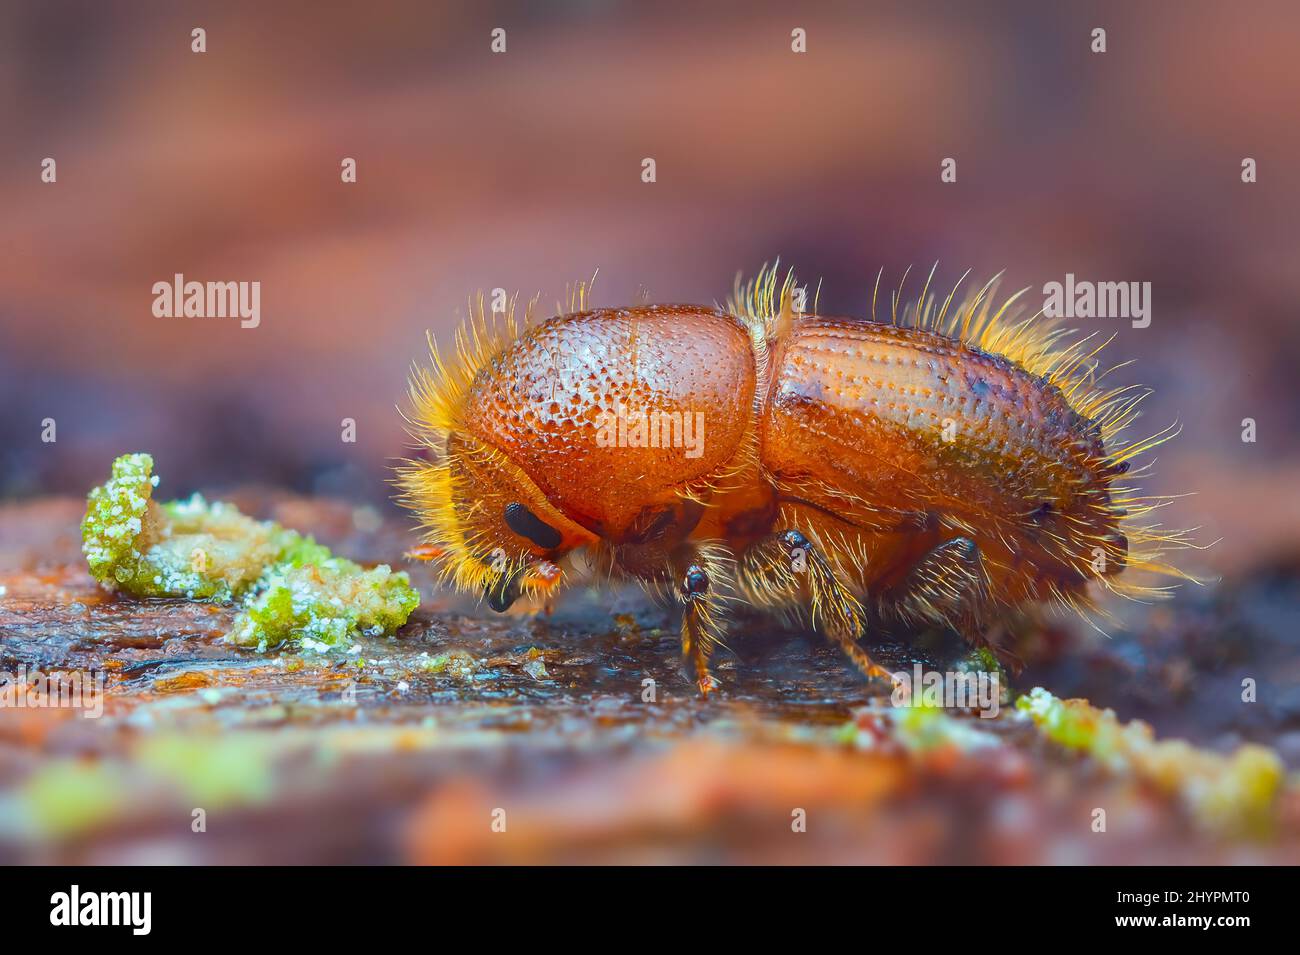 The European spruce bark beetle - Ips typographus Stock Photo